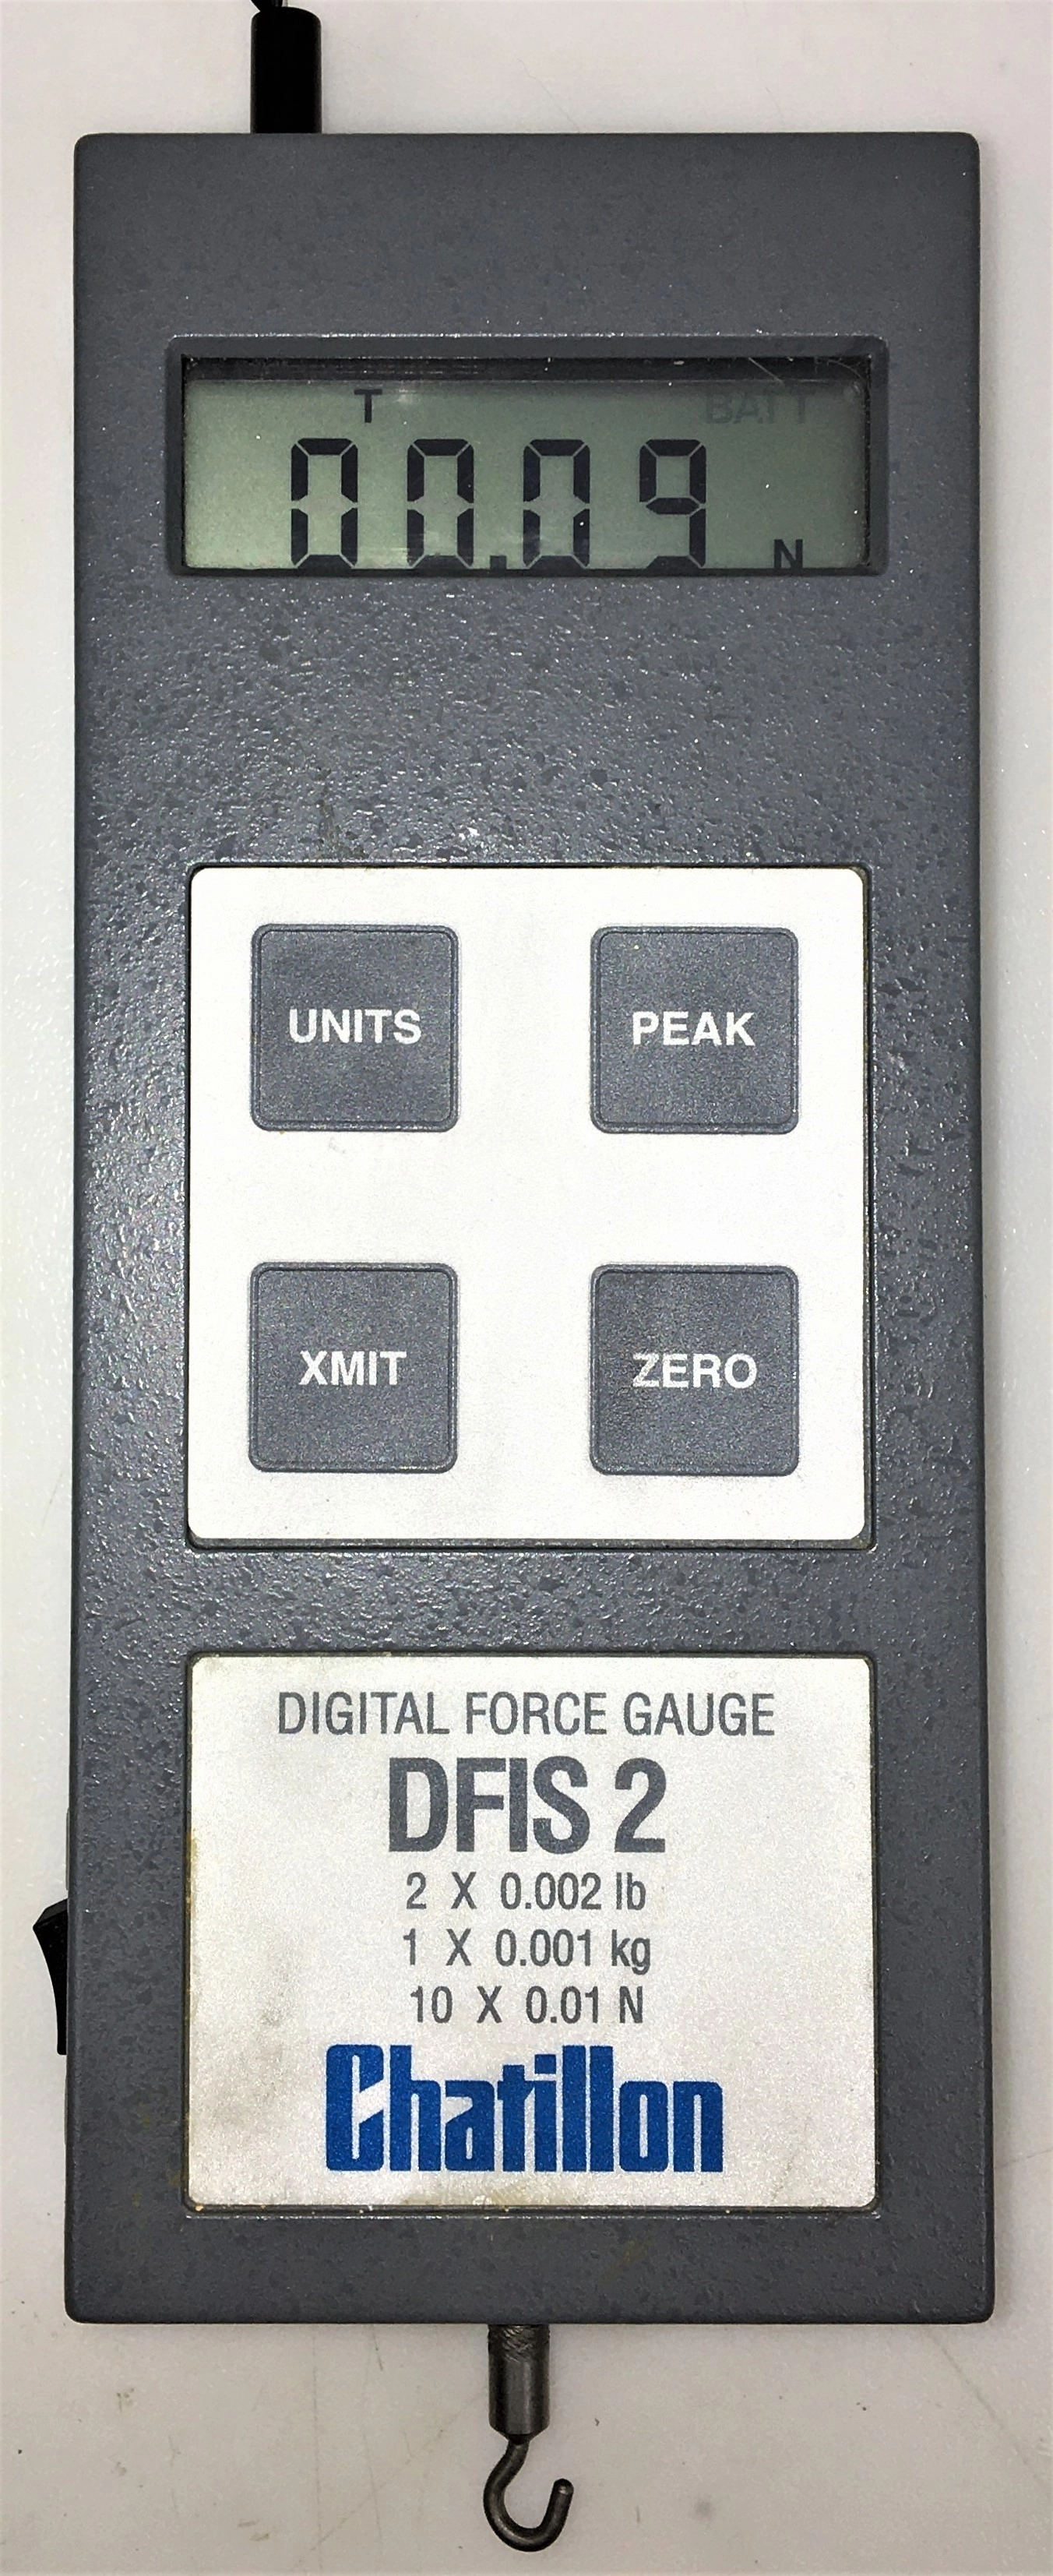 Chatillon DFIS 2 Digital Force Gauge